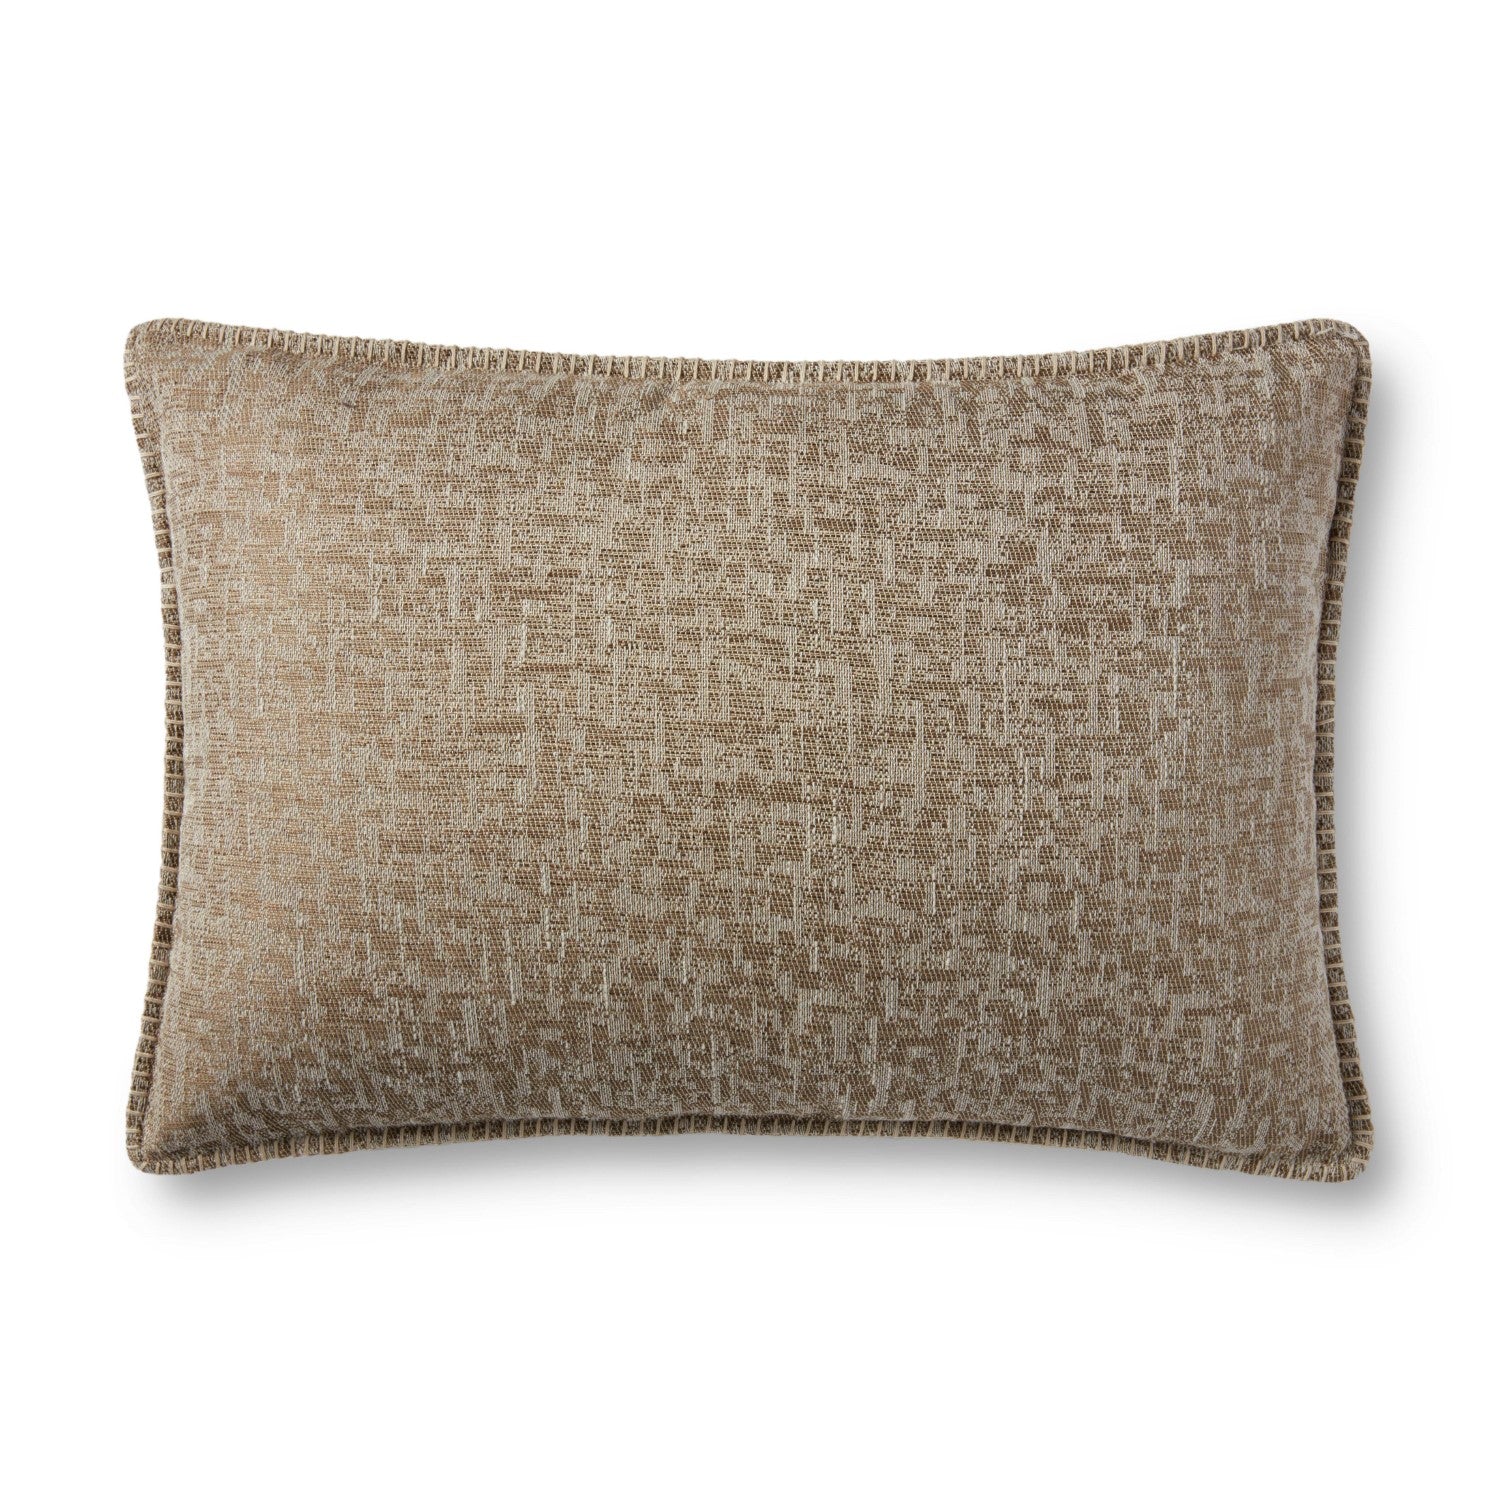 Shop Beige Pillow | Burke Decor